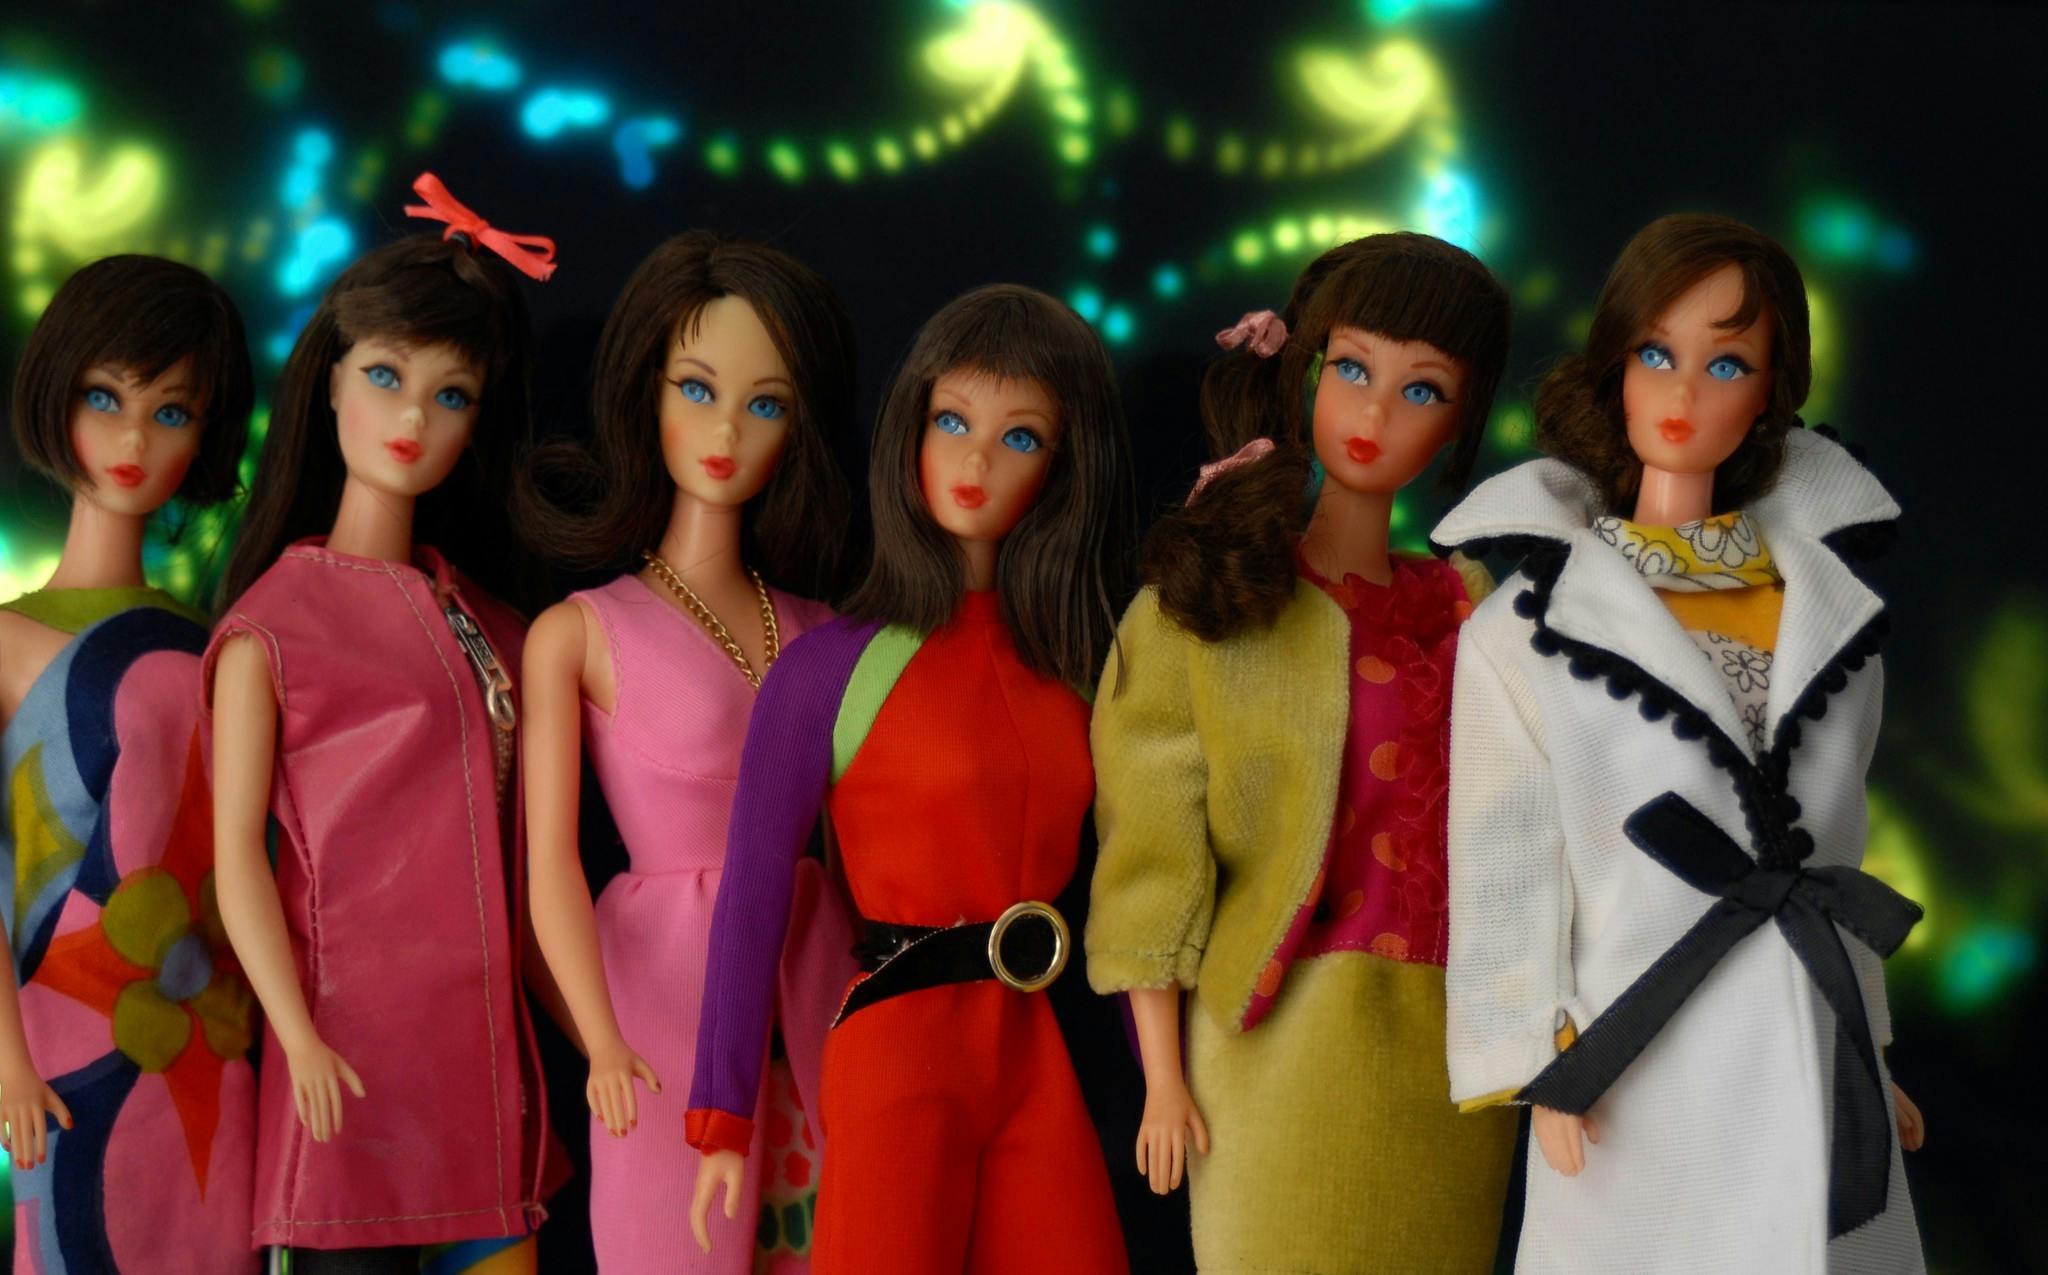 Mod Barbie blog - Mod Barbie & Other 70s Dolls